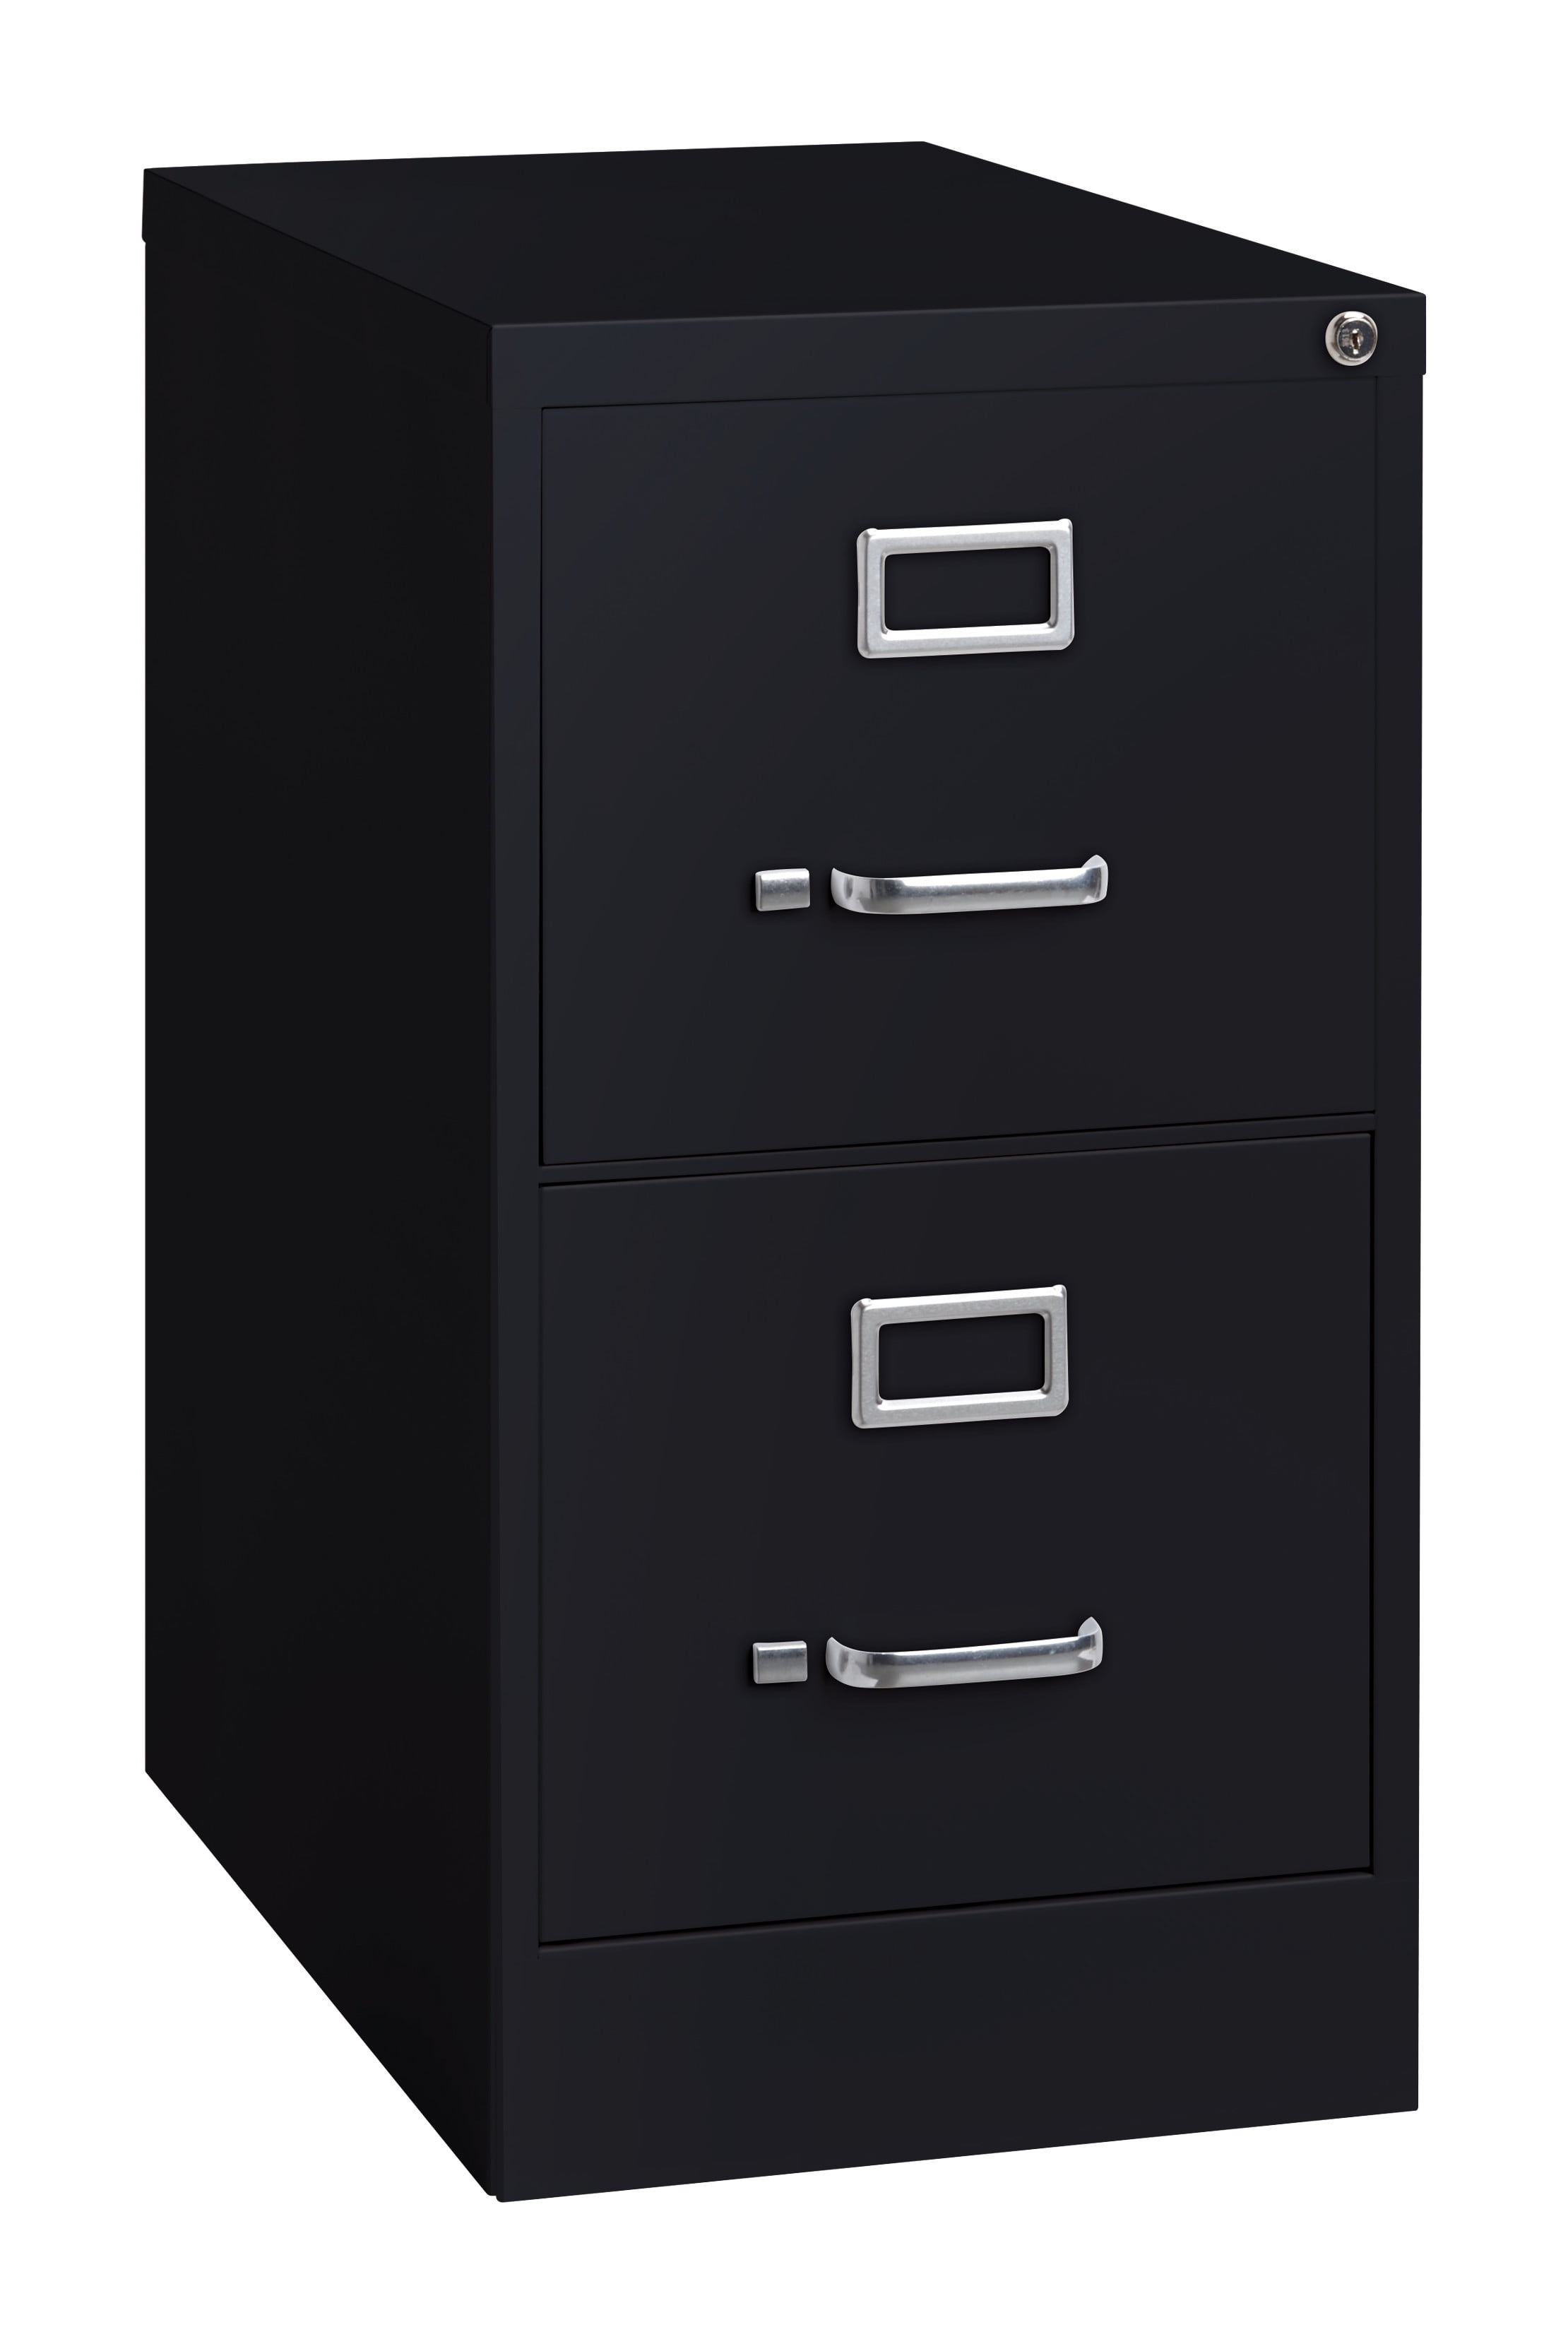 Hirsh Industries SOHO 2 Drawer Letter File Cabinet in Black 